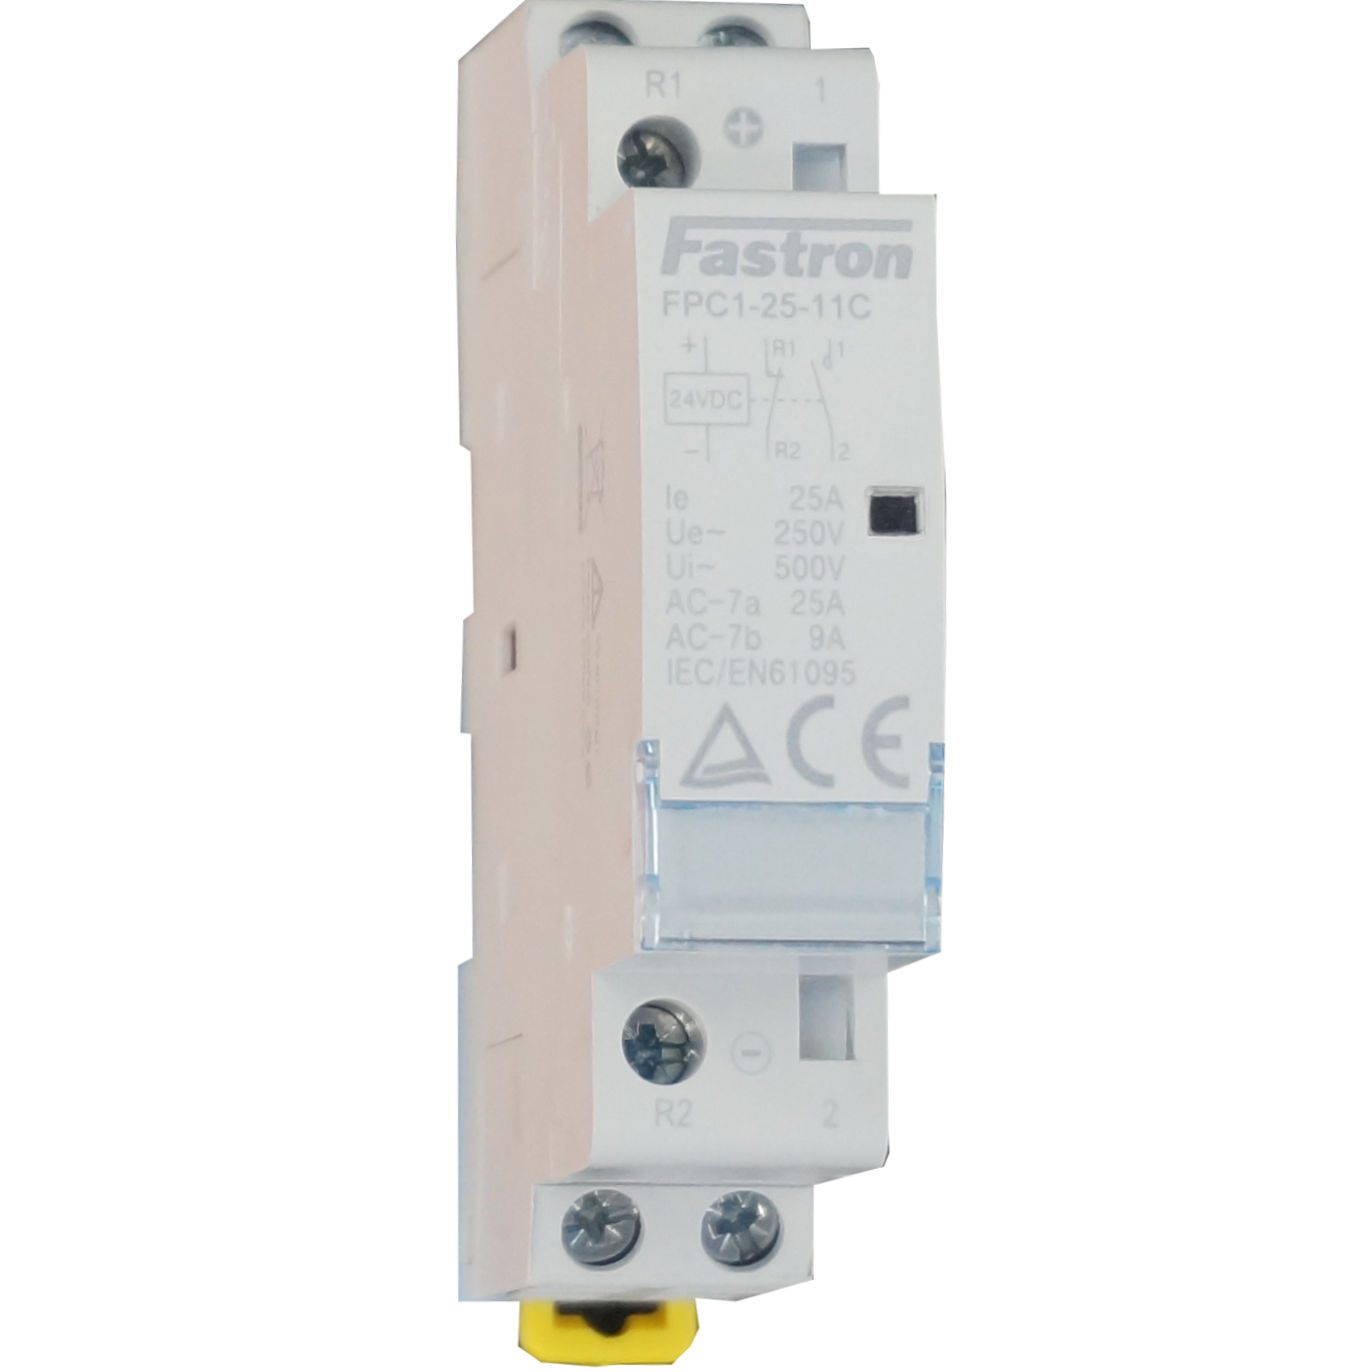 FPC1-25-11-24VDC, Two Pole 1 x SPST NO, 1 x SPST NC Modular Contactor 240VAC, 25 Amp, 24VDC Control Voltage, 50/60Hz